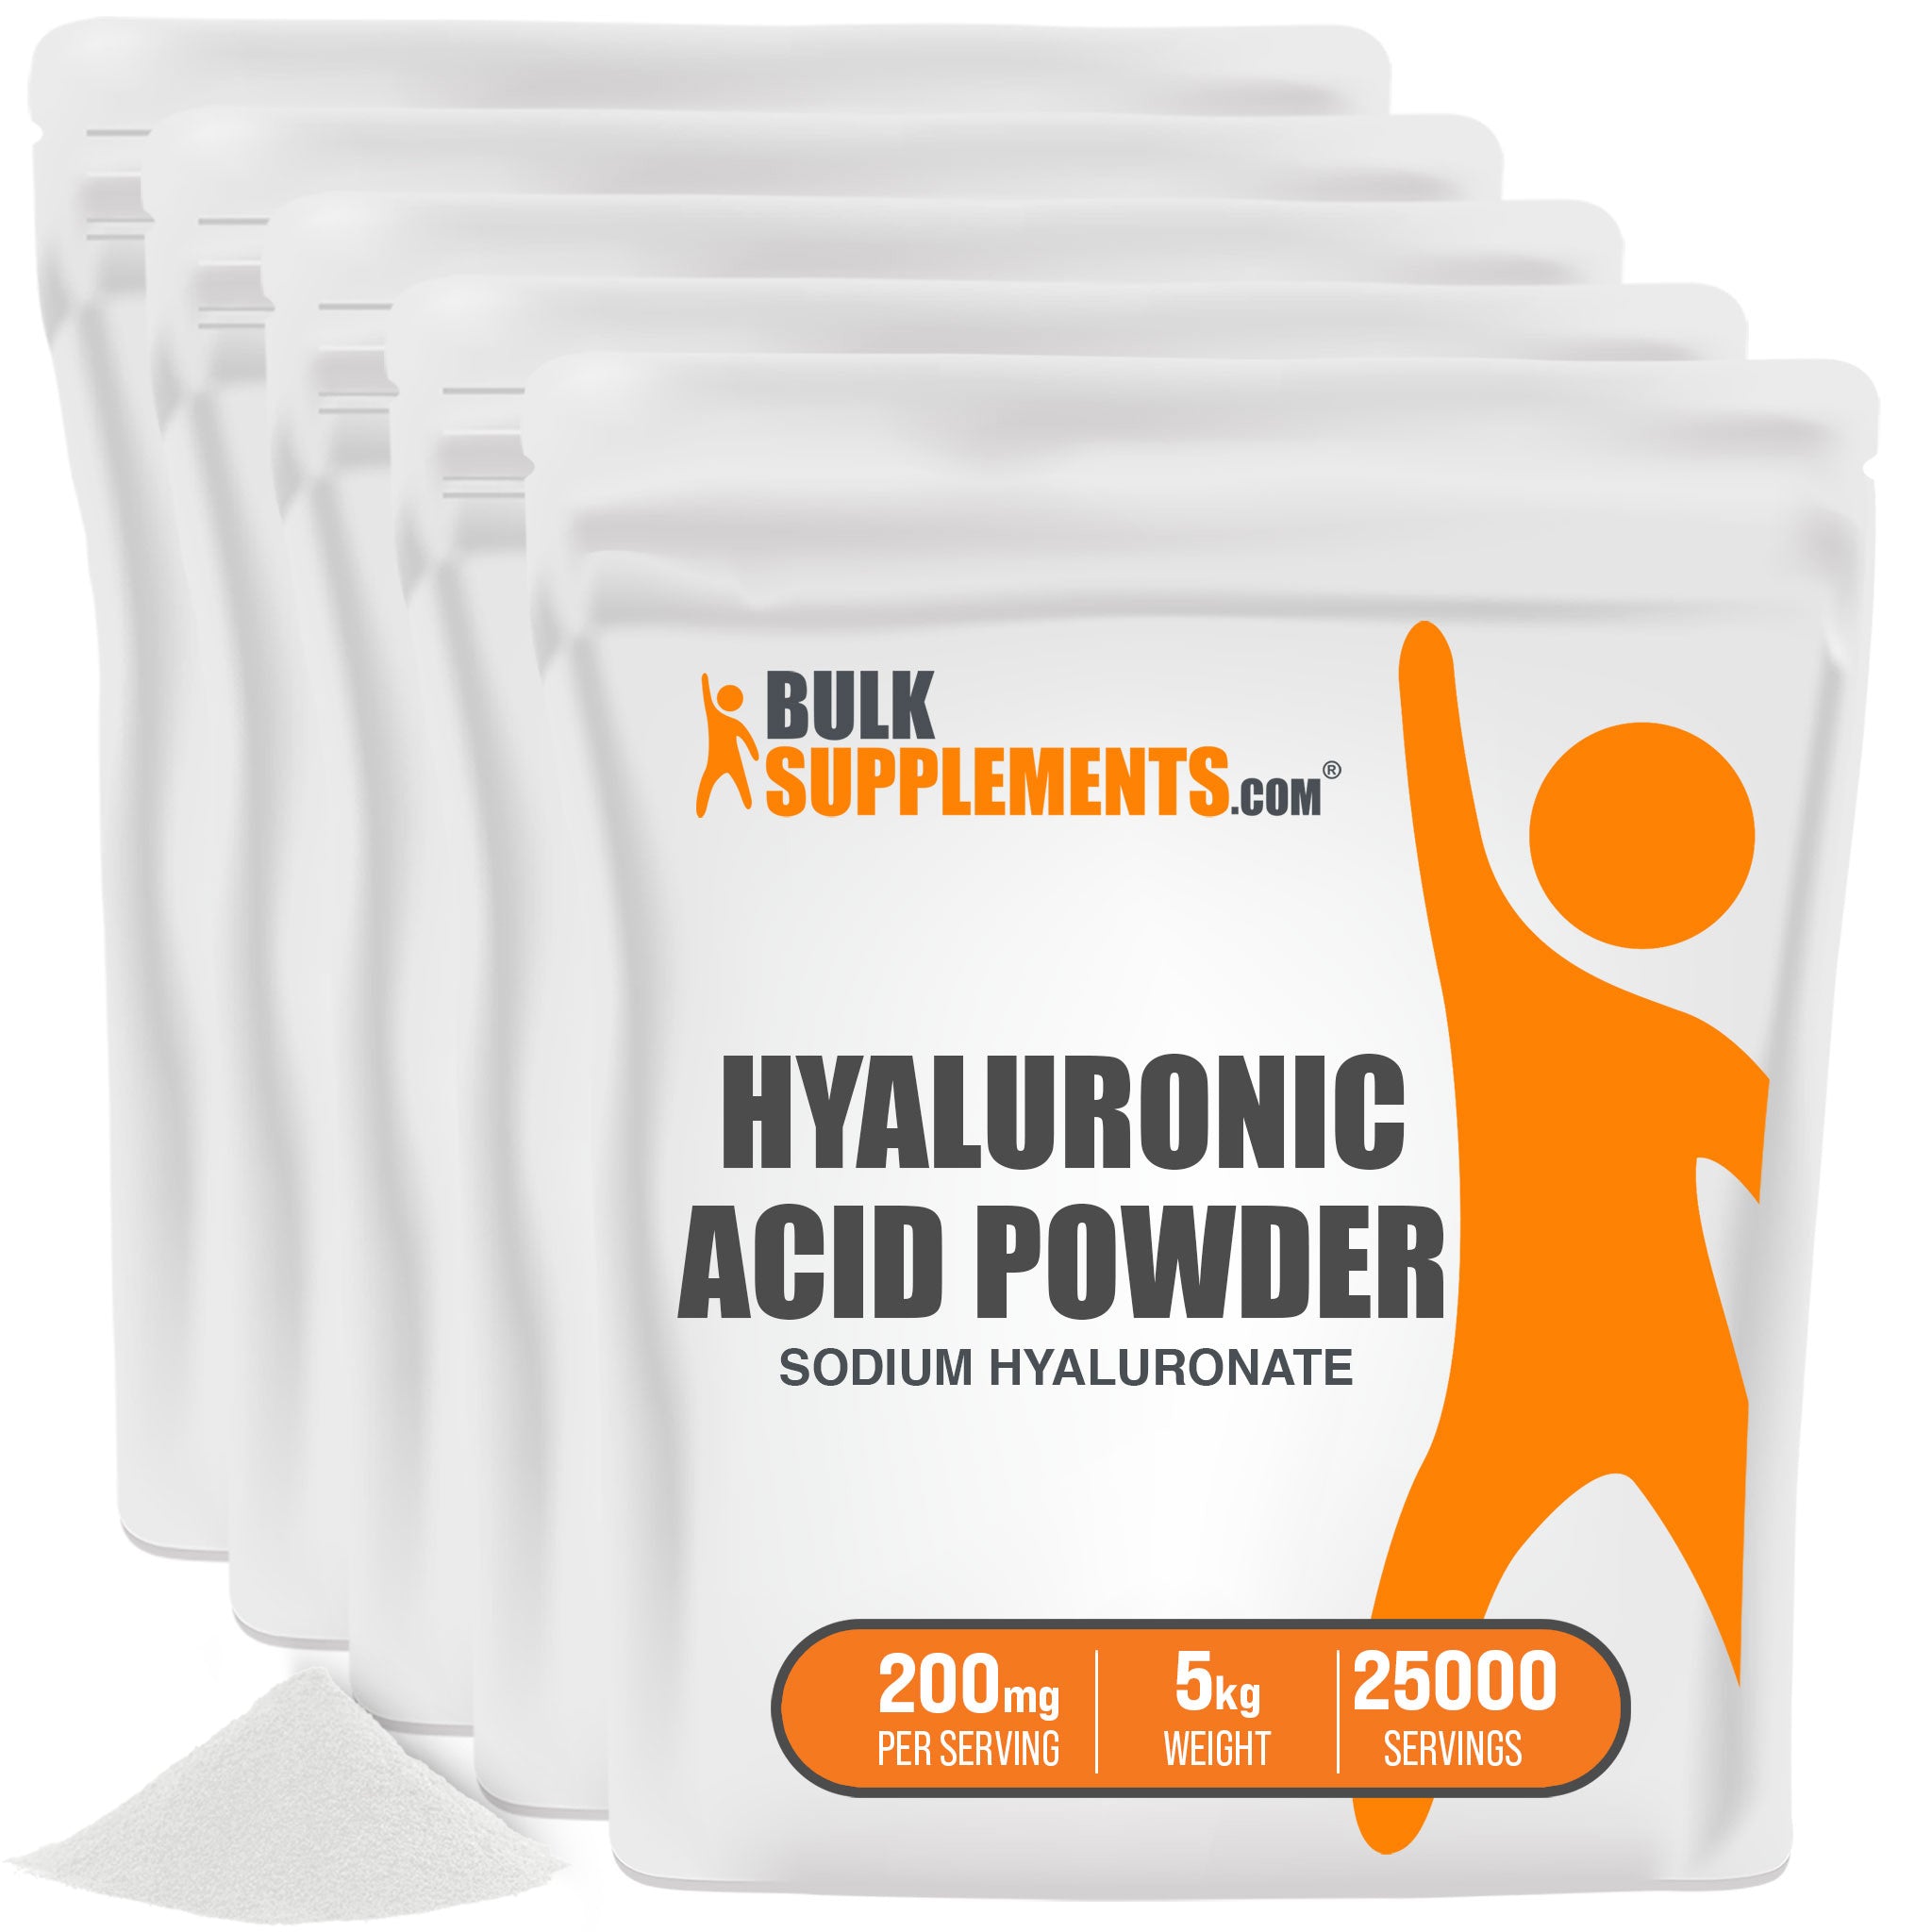 BulkSupplements Hyaluronic Acid Powder Sodium Hyaluronate 5kg bags